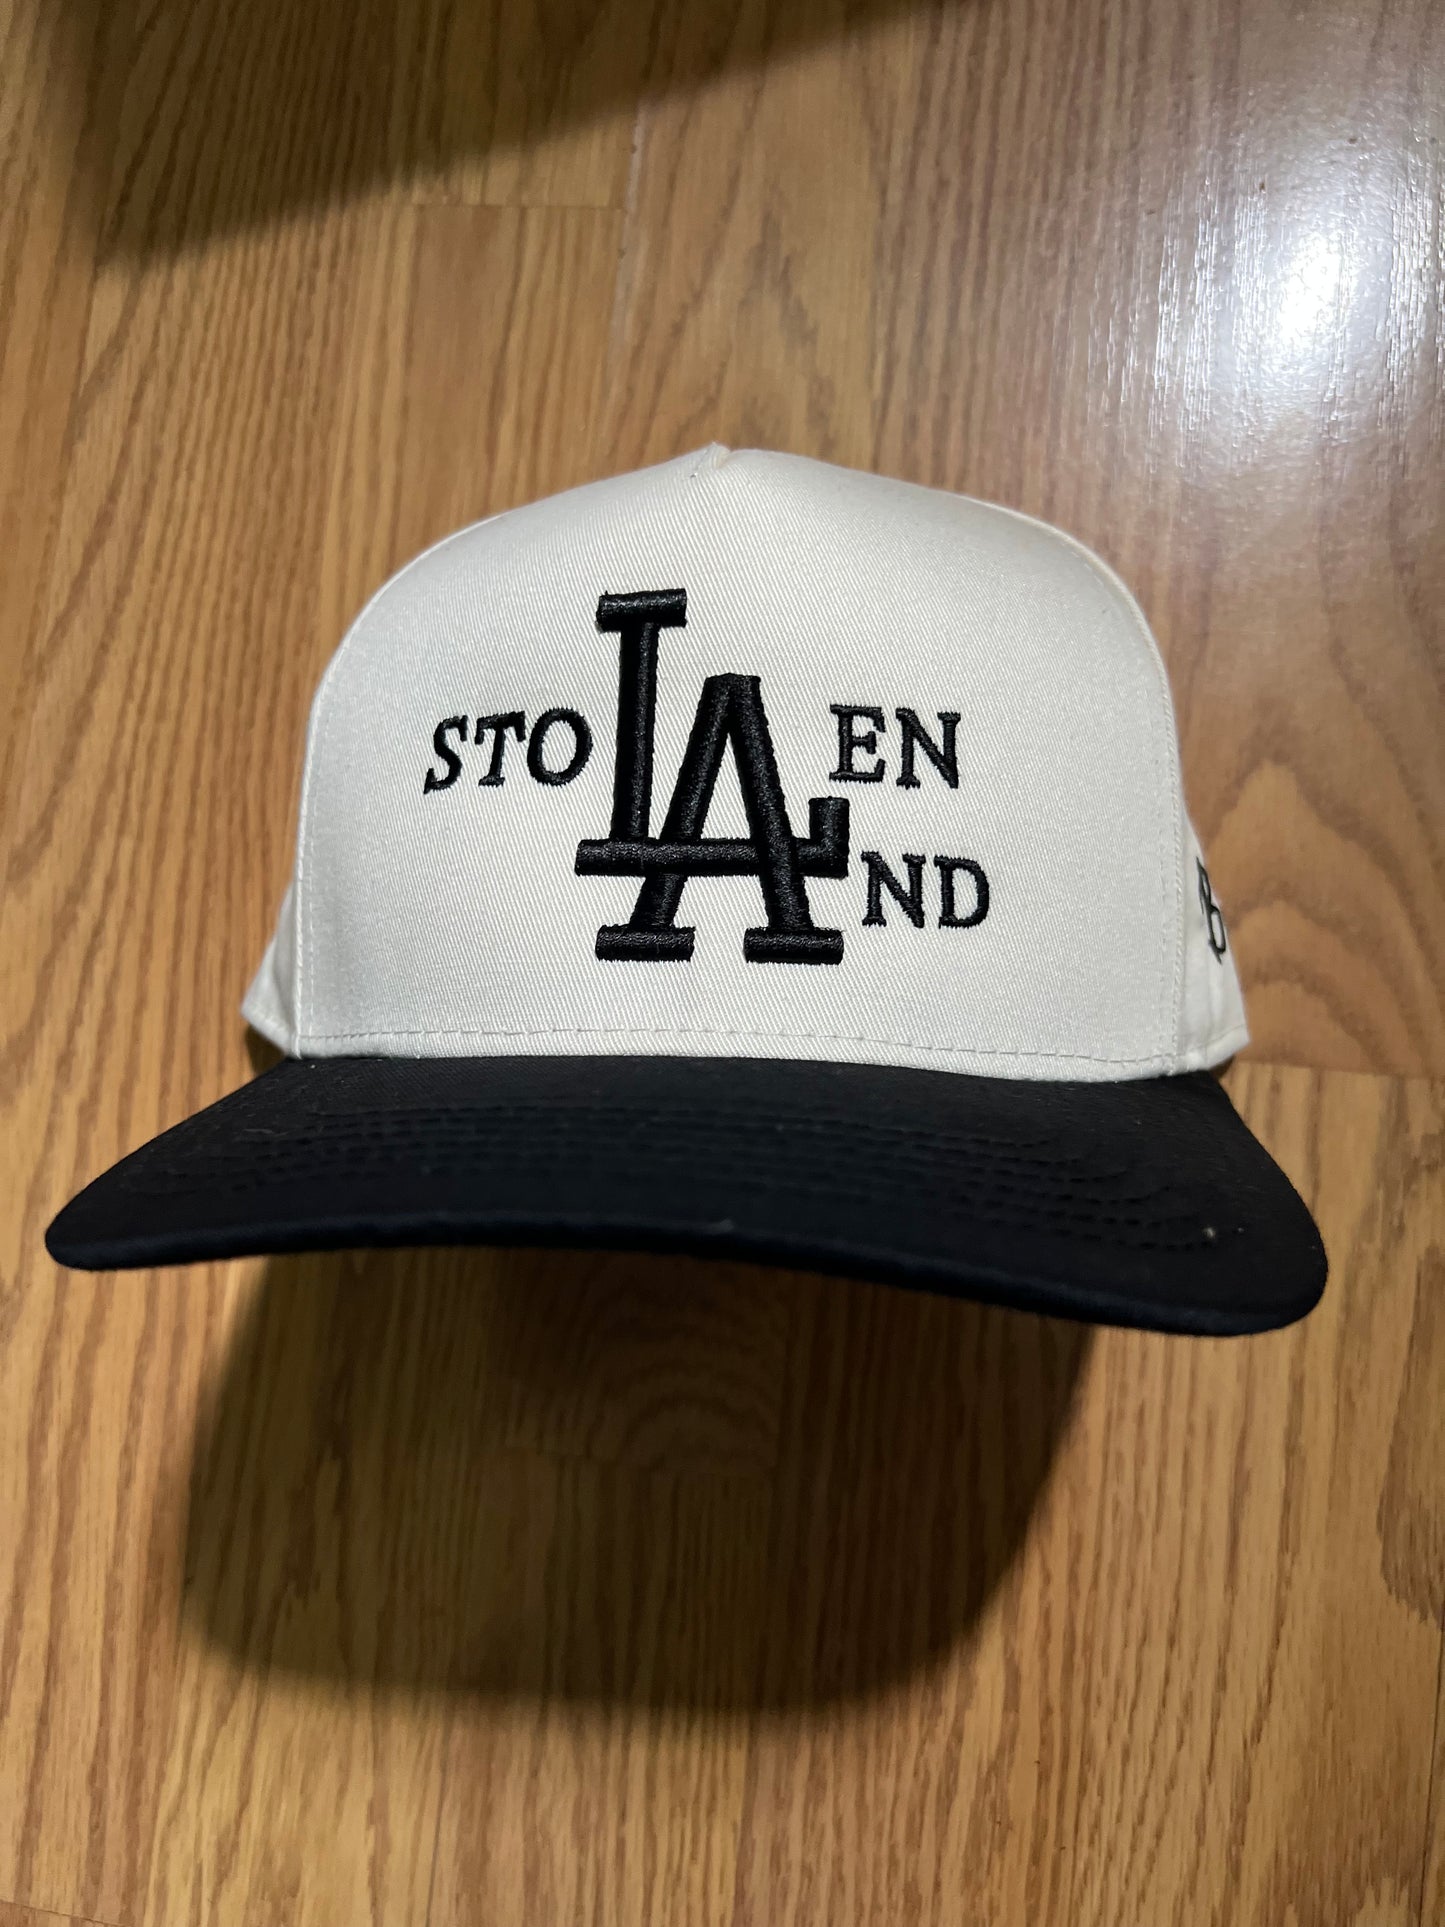 Stolen LAnd (black on off white) hat